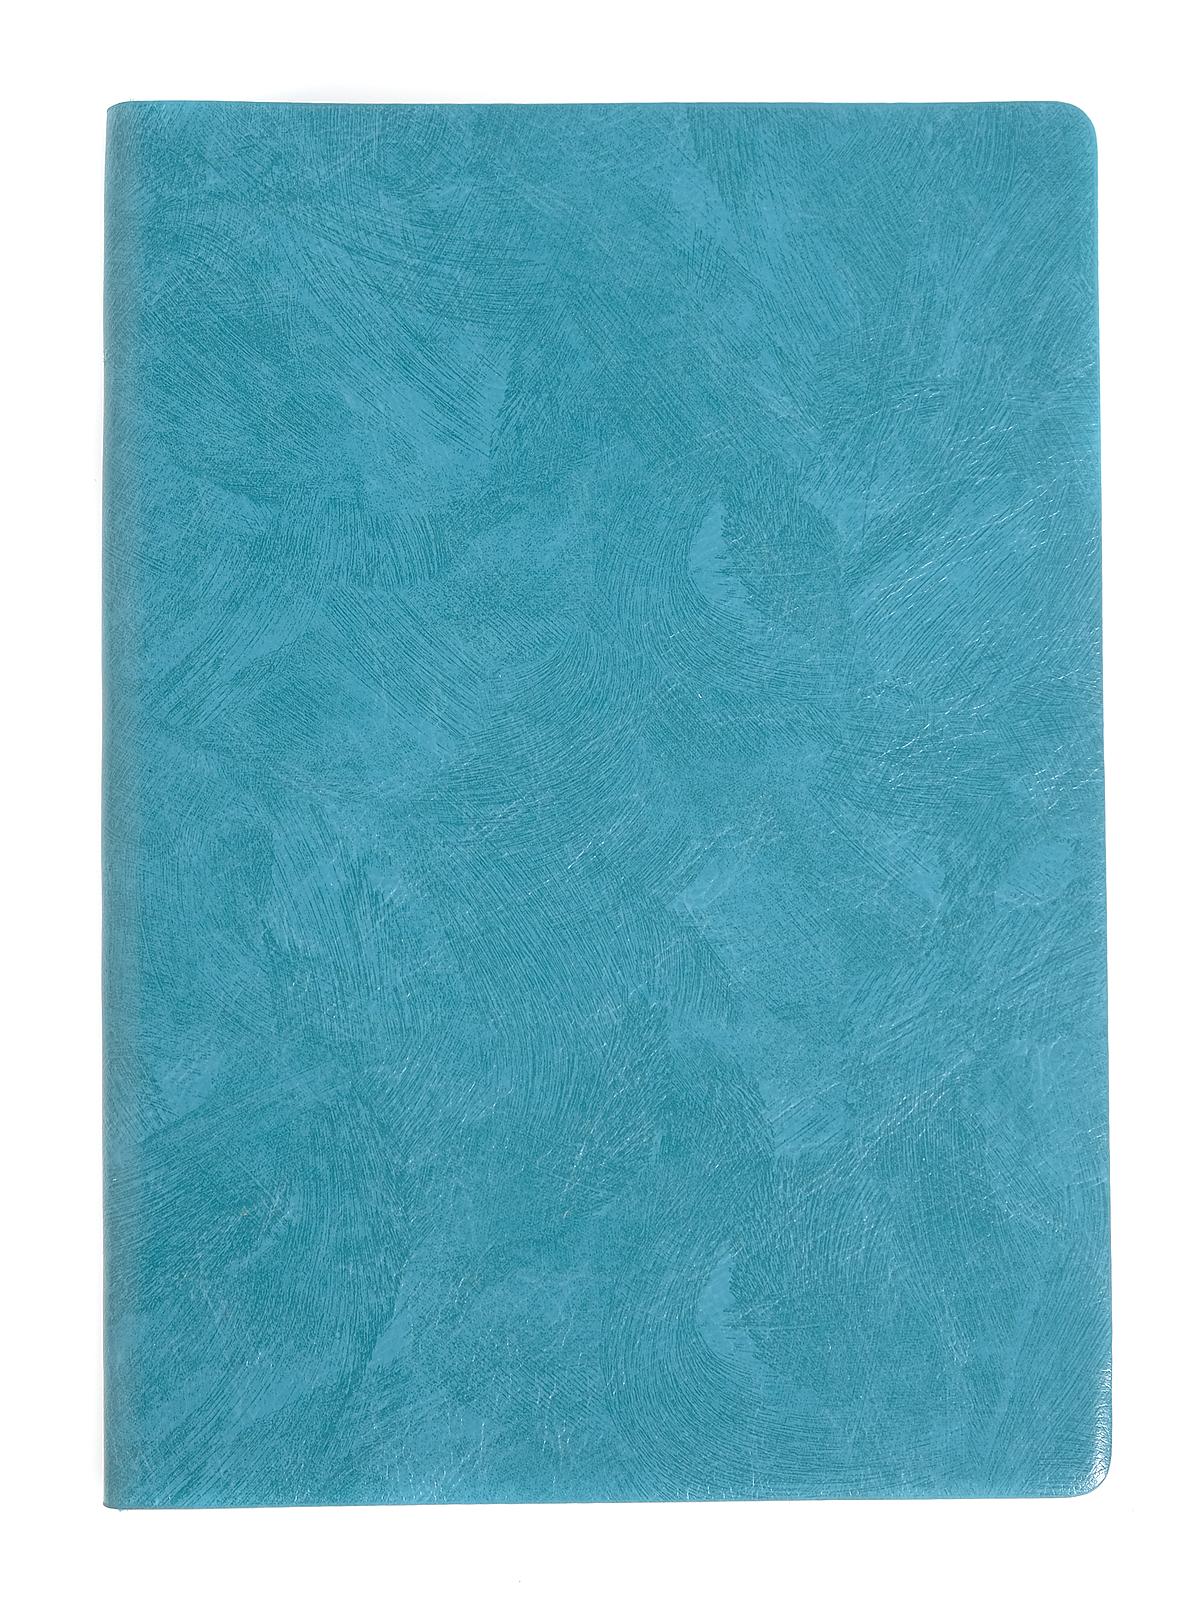 Artisan Journal Notebook Turquoise